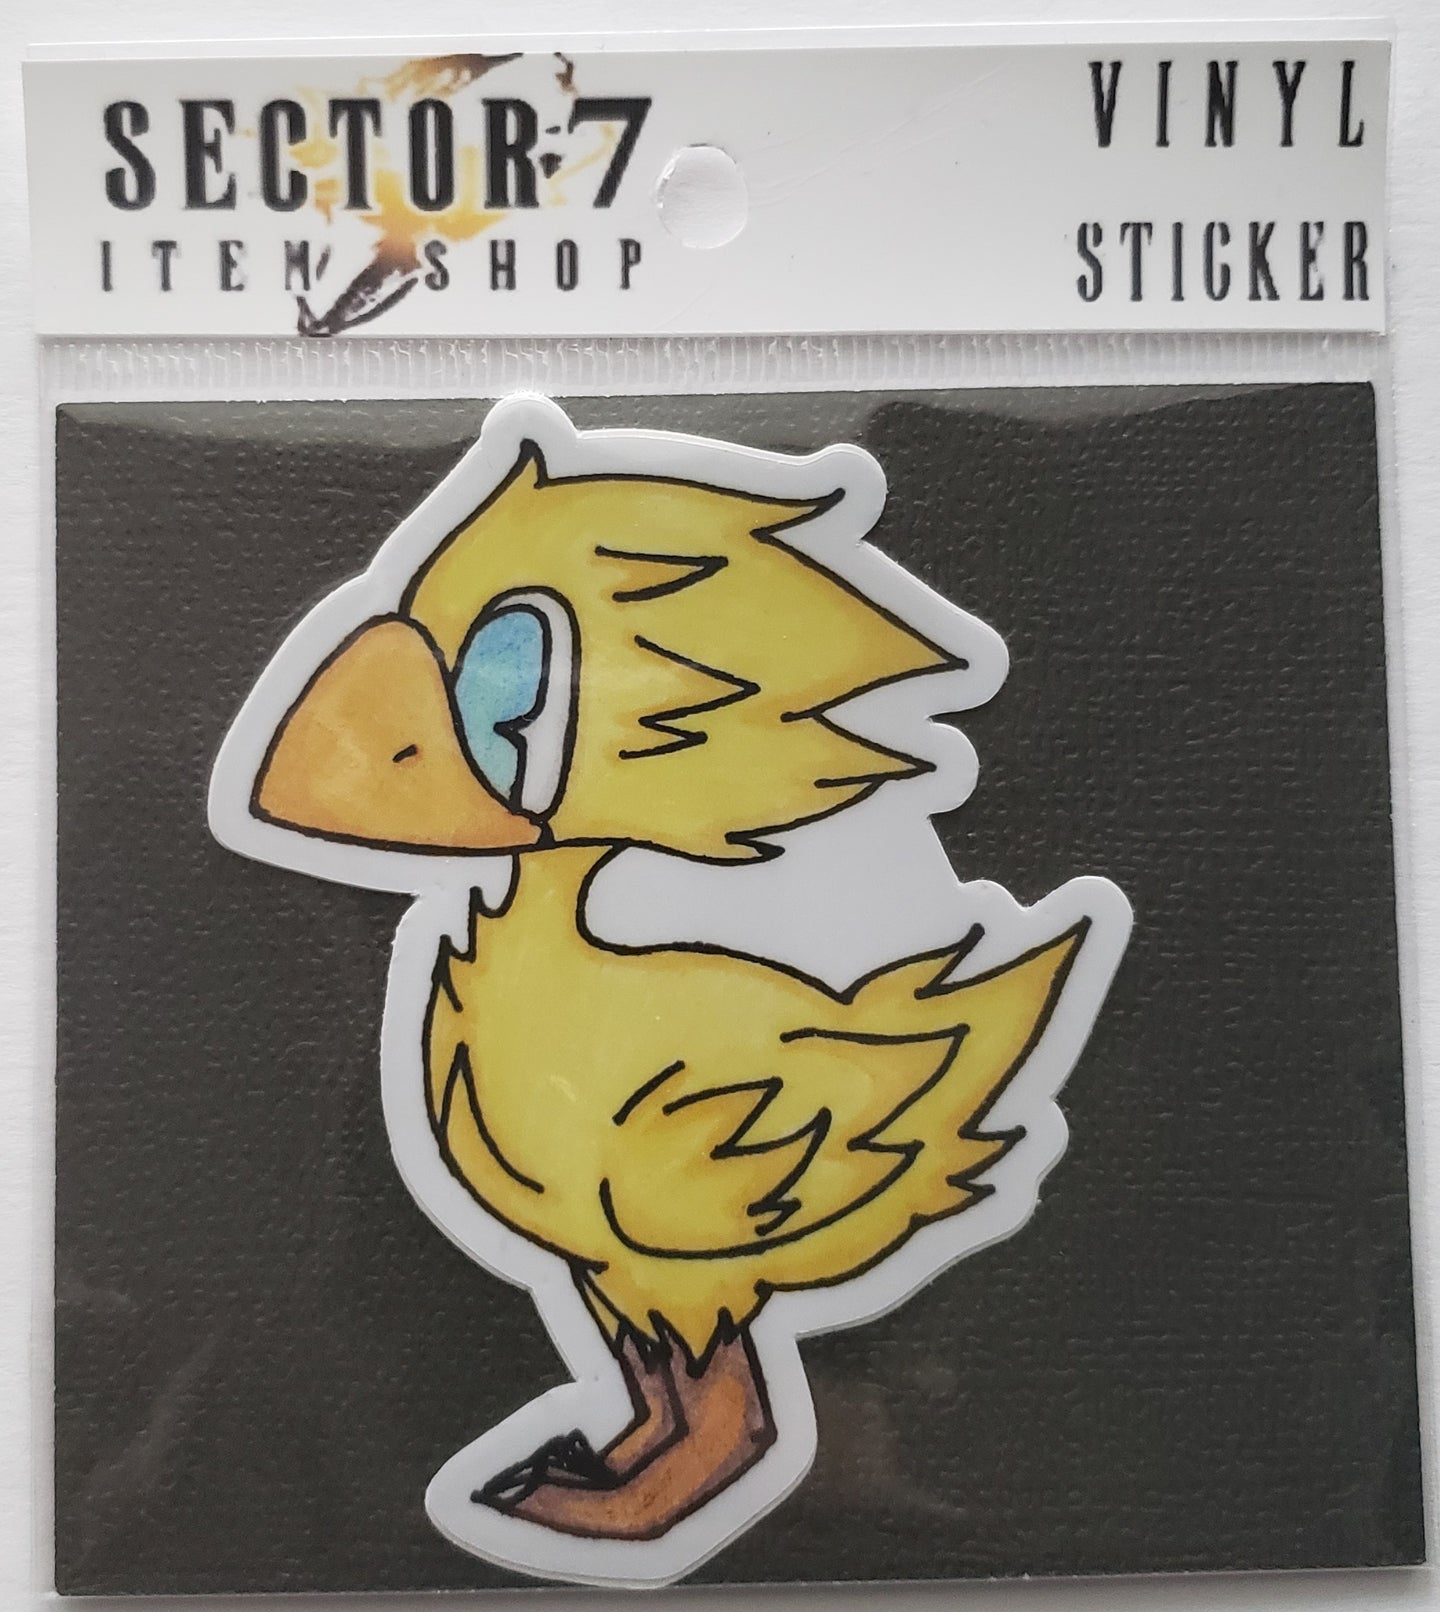 Boco the Choco Vinyl Sticker - Sector 7 Item Shop